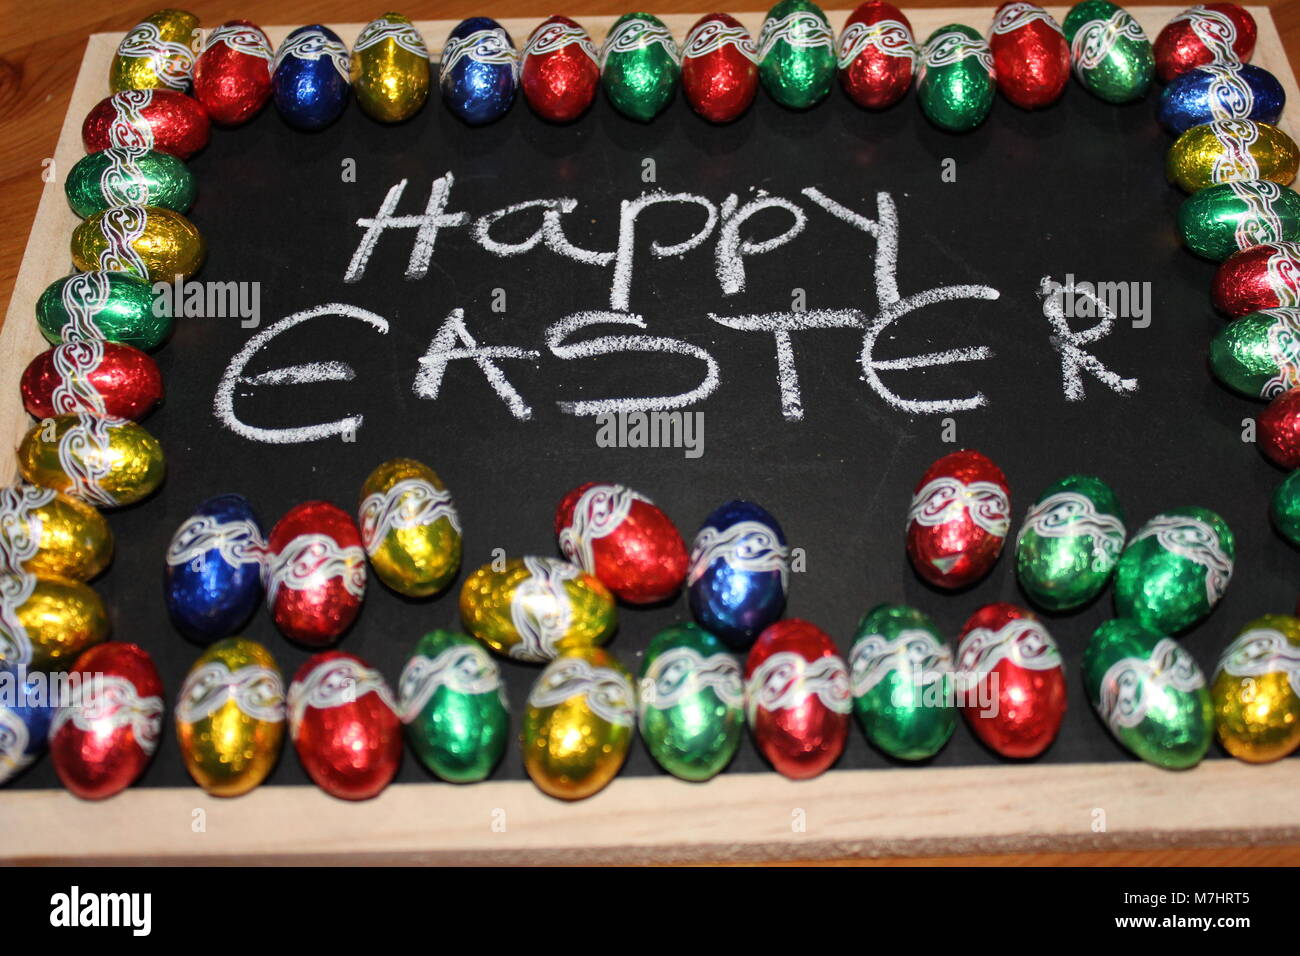 Happy easter bunny baby teething toy Stock Photo